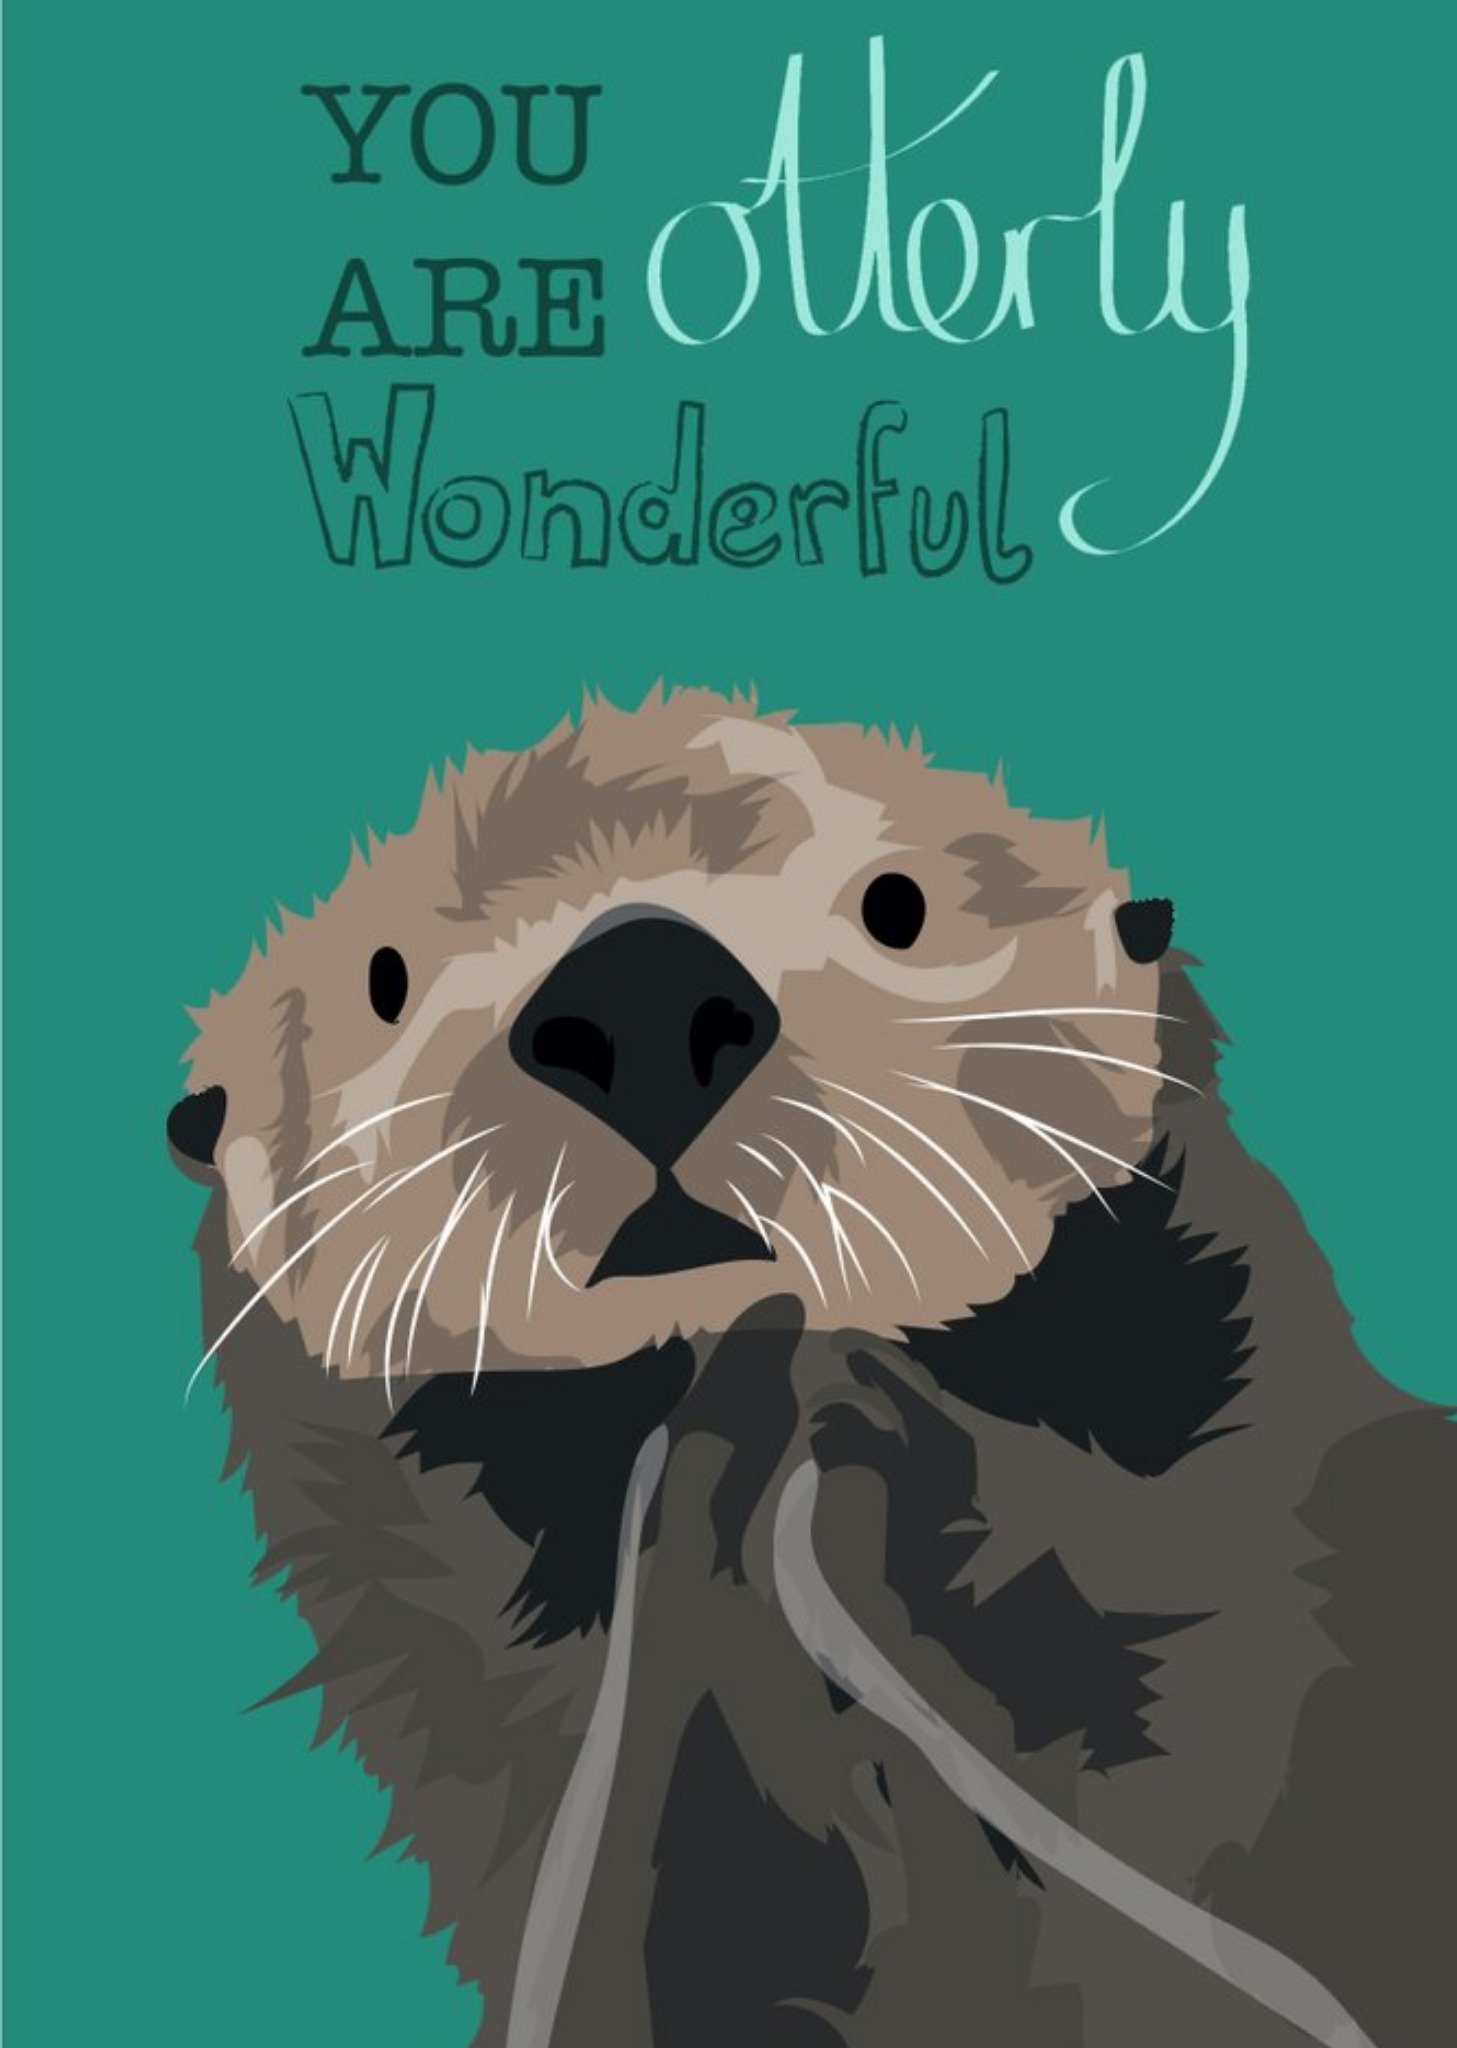 Moonpig Illustrated You Are Otterley Wonderful Otter Card Ecard